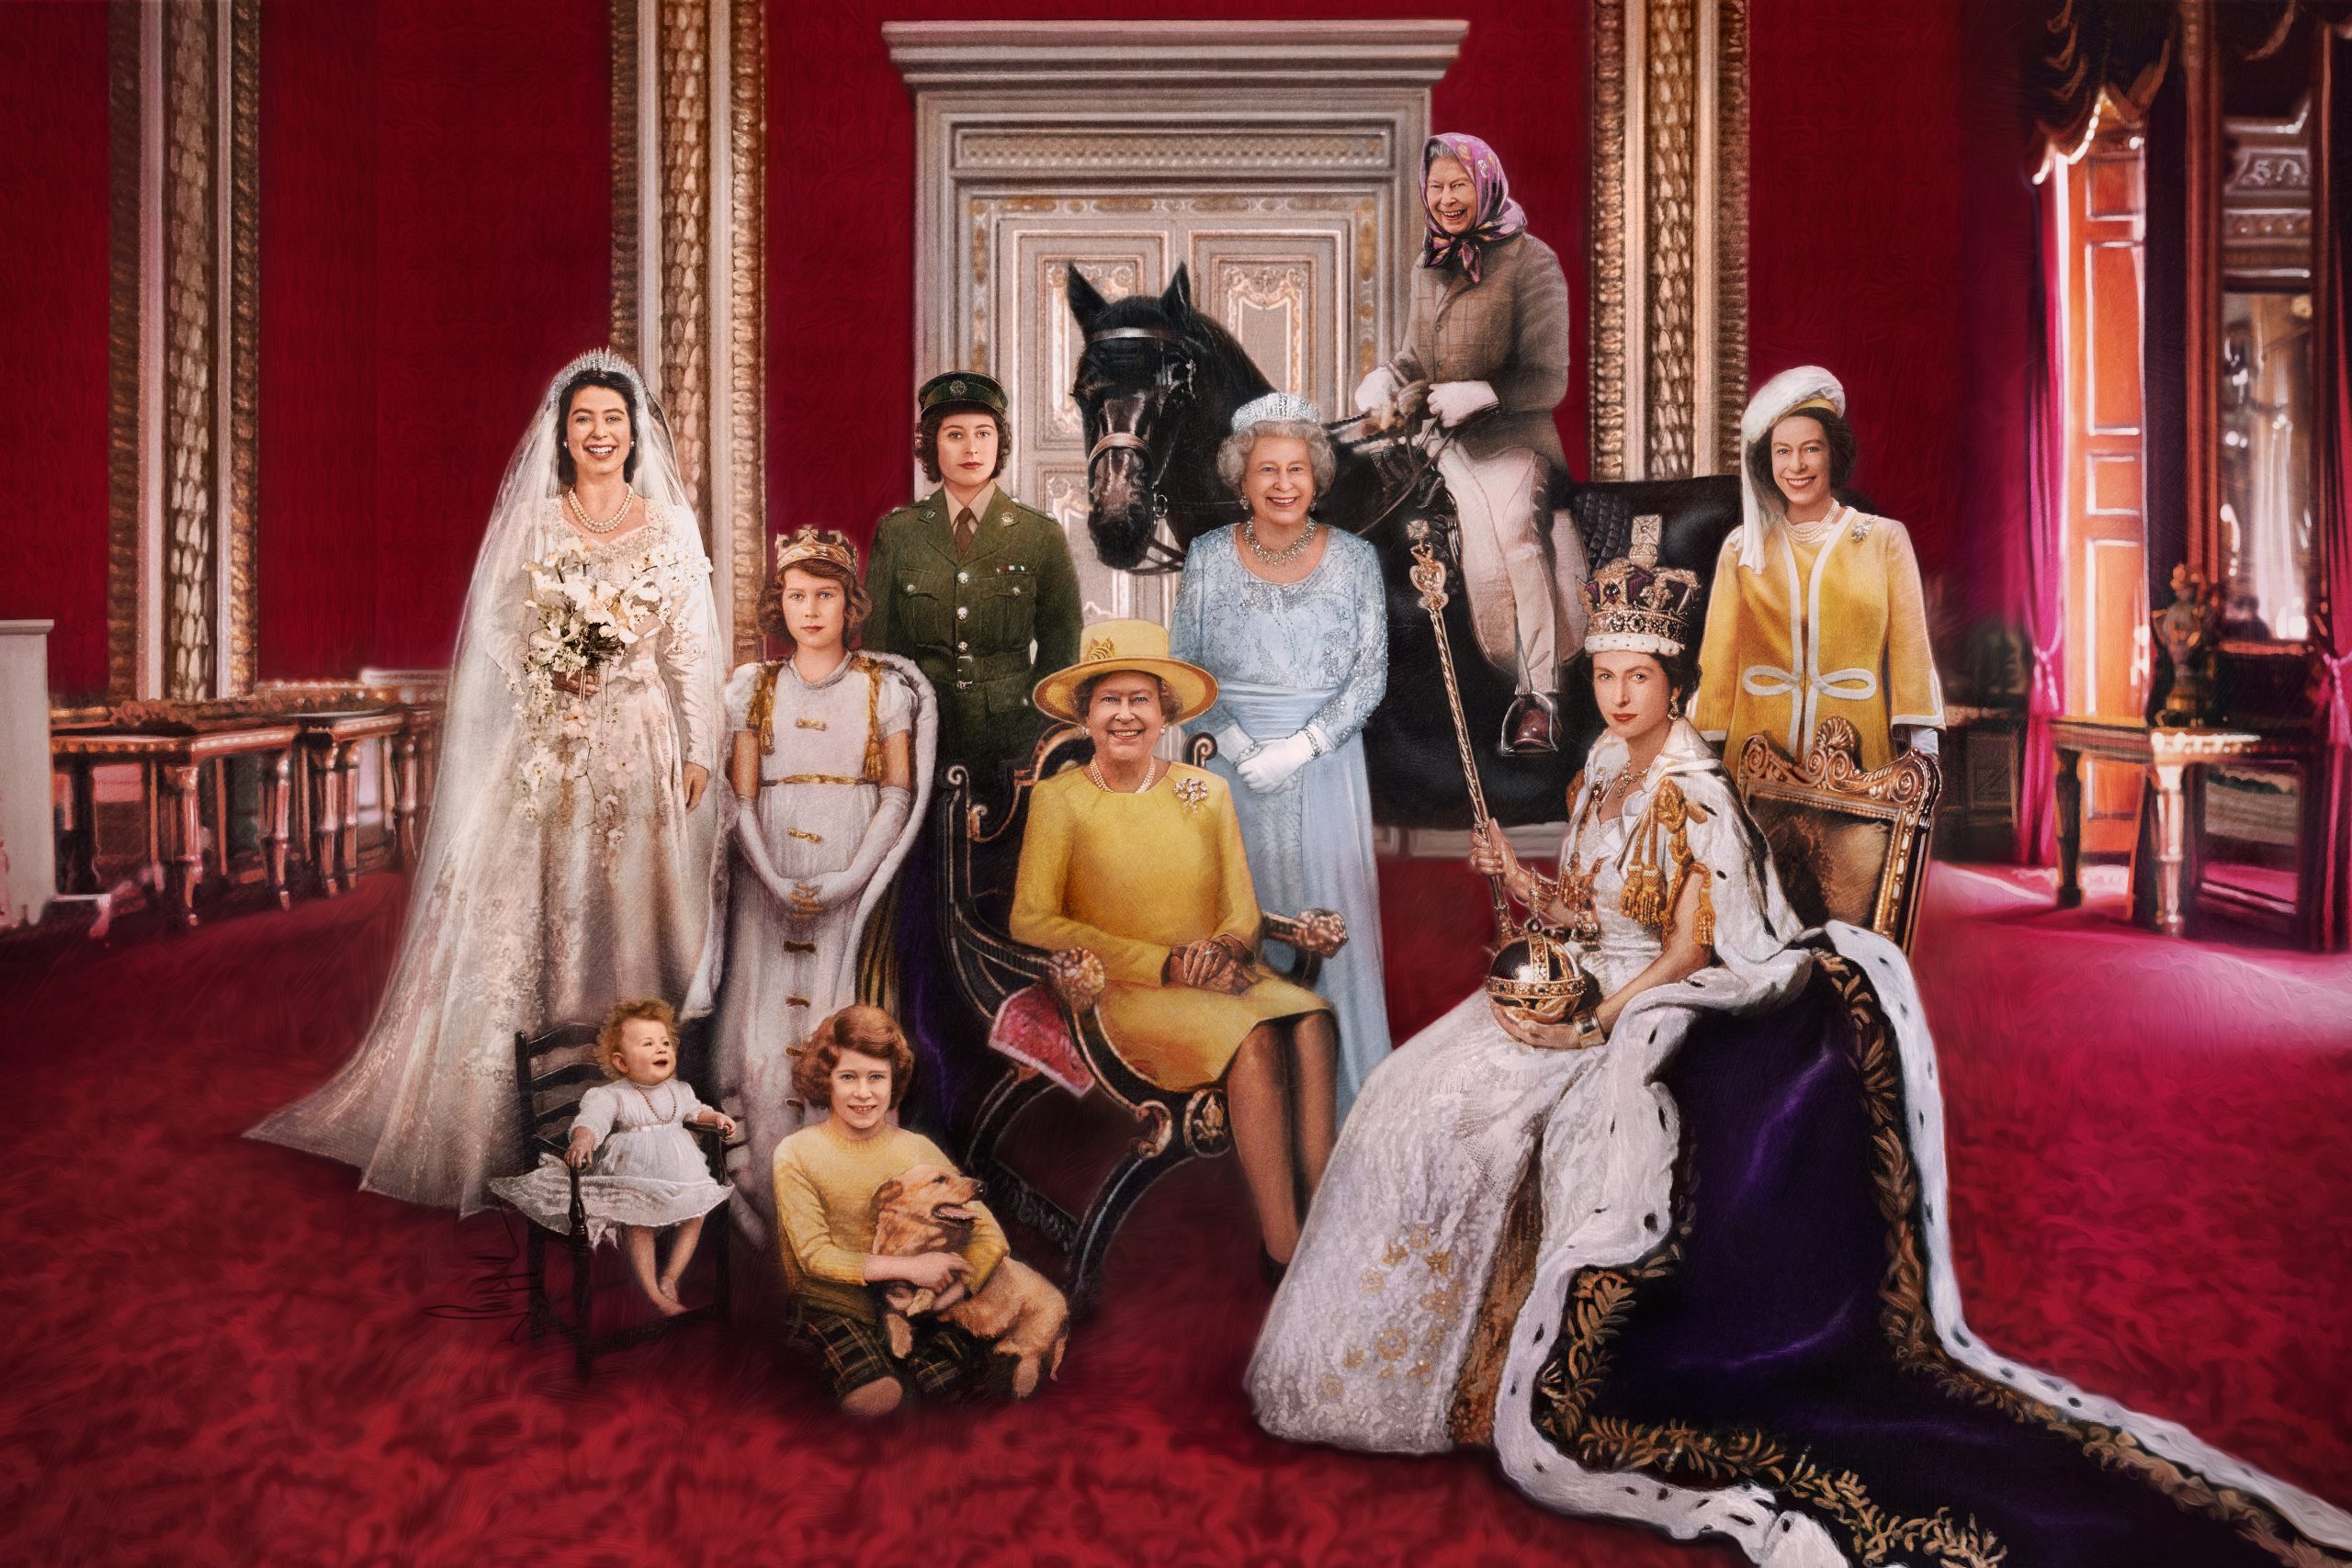 Digital portraits of Queen Elizabeth II through time